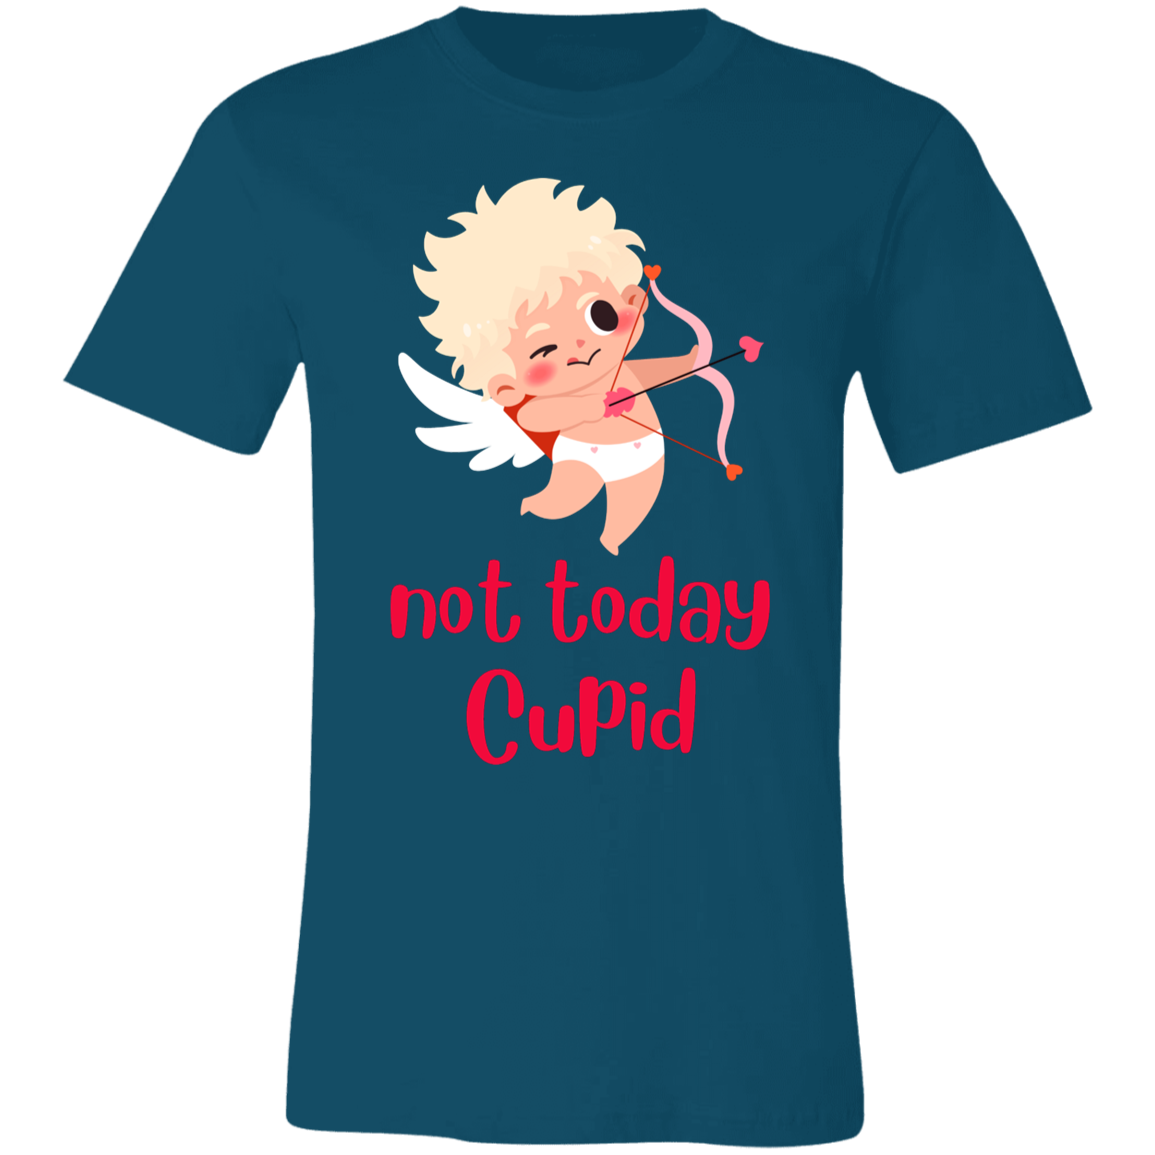 not today Cupid Unisex Jersey Short-Sleeve T-Shirt